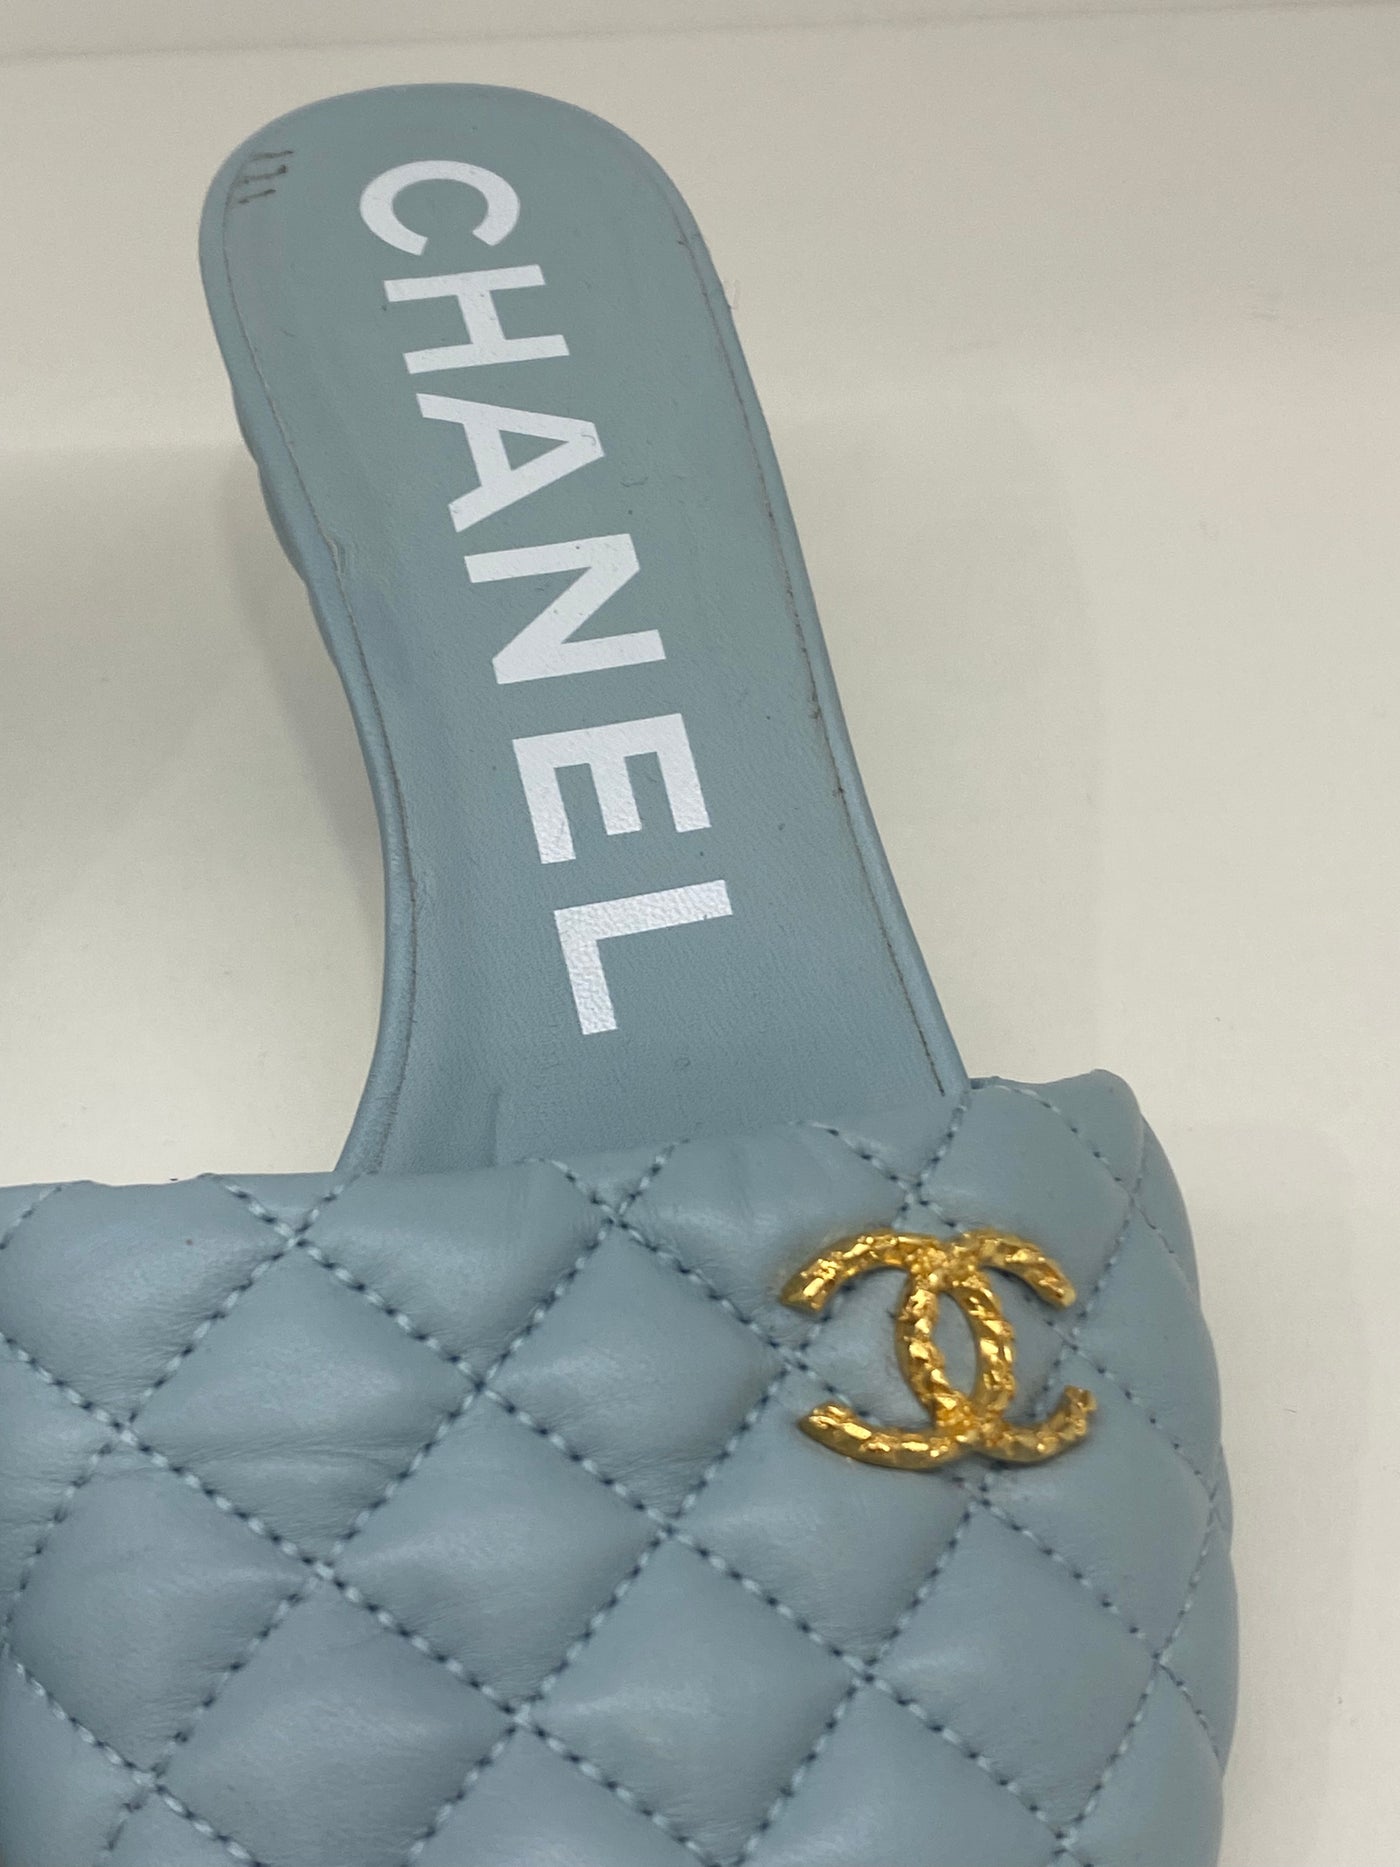 Chanel Light Blue Leather Mule 38C